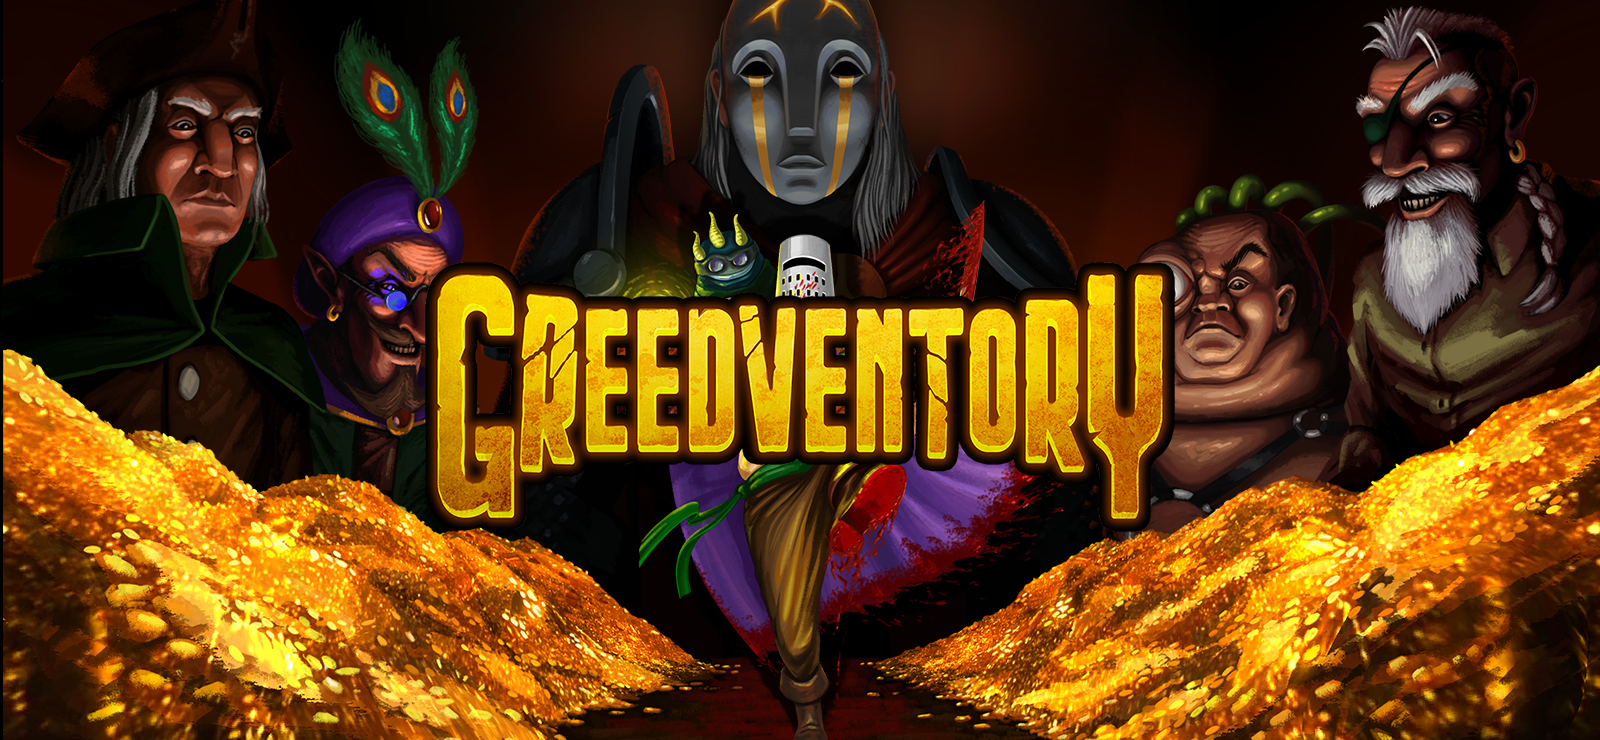 Greedventory